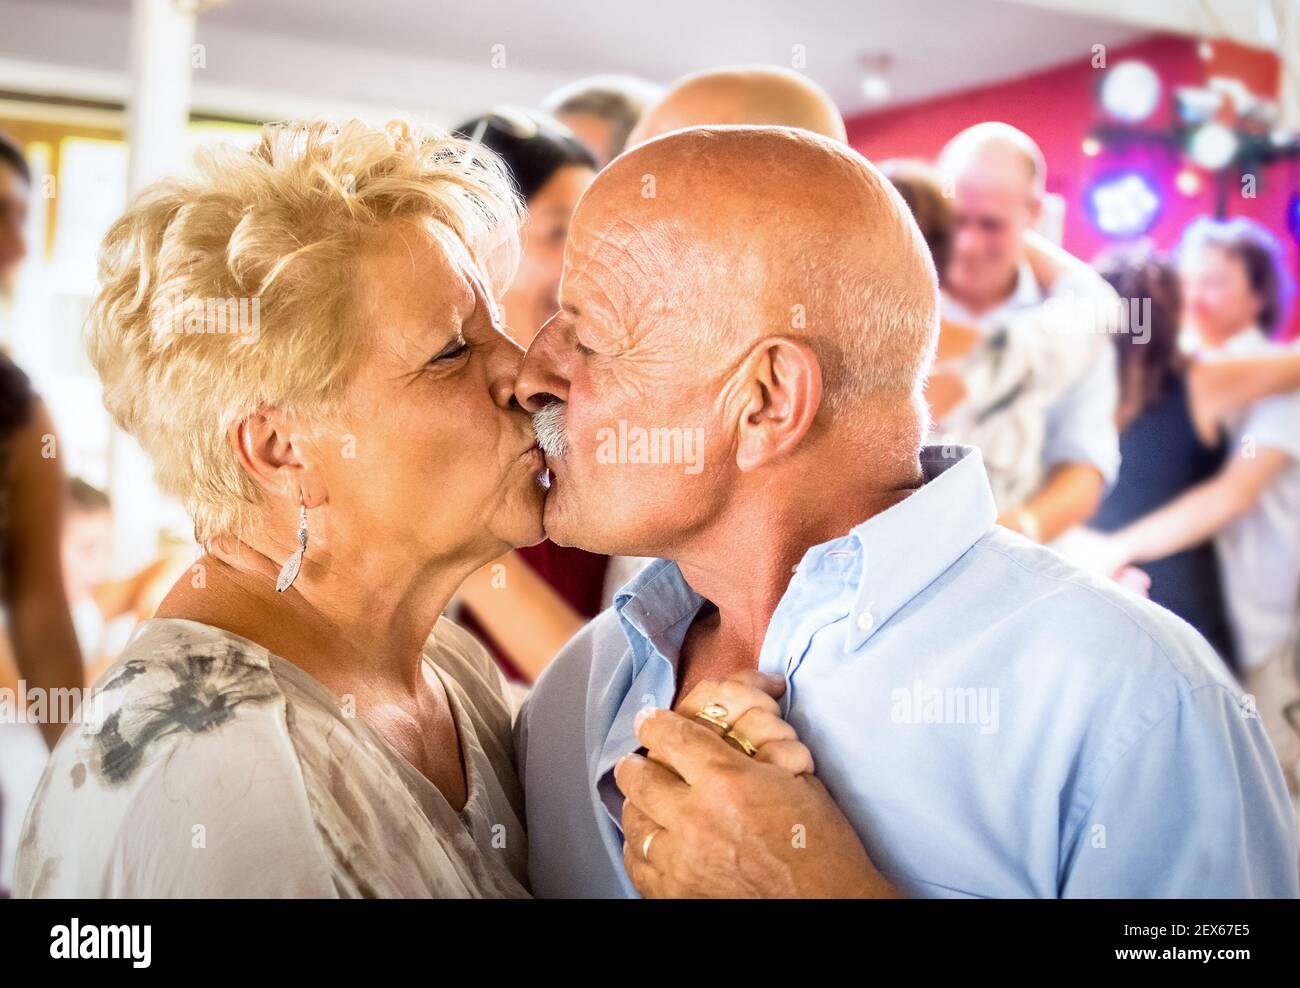 Happy senior retired couple having fun on dancing at restaurant wedding celebration party - Love concept of joyful elderly and retirement lifestyle Stock Photo